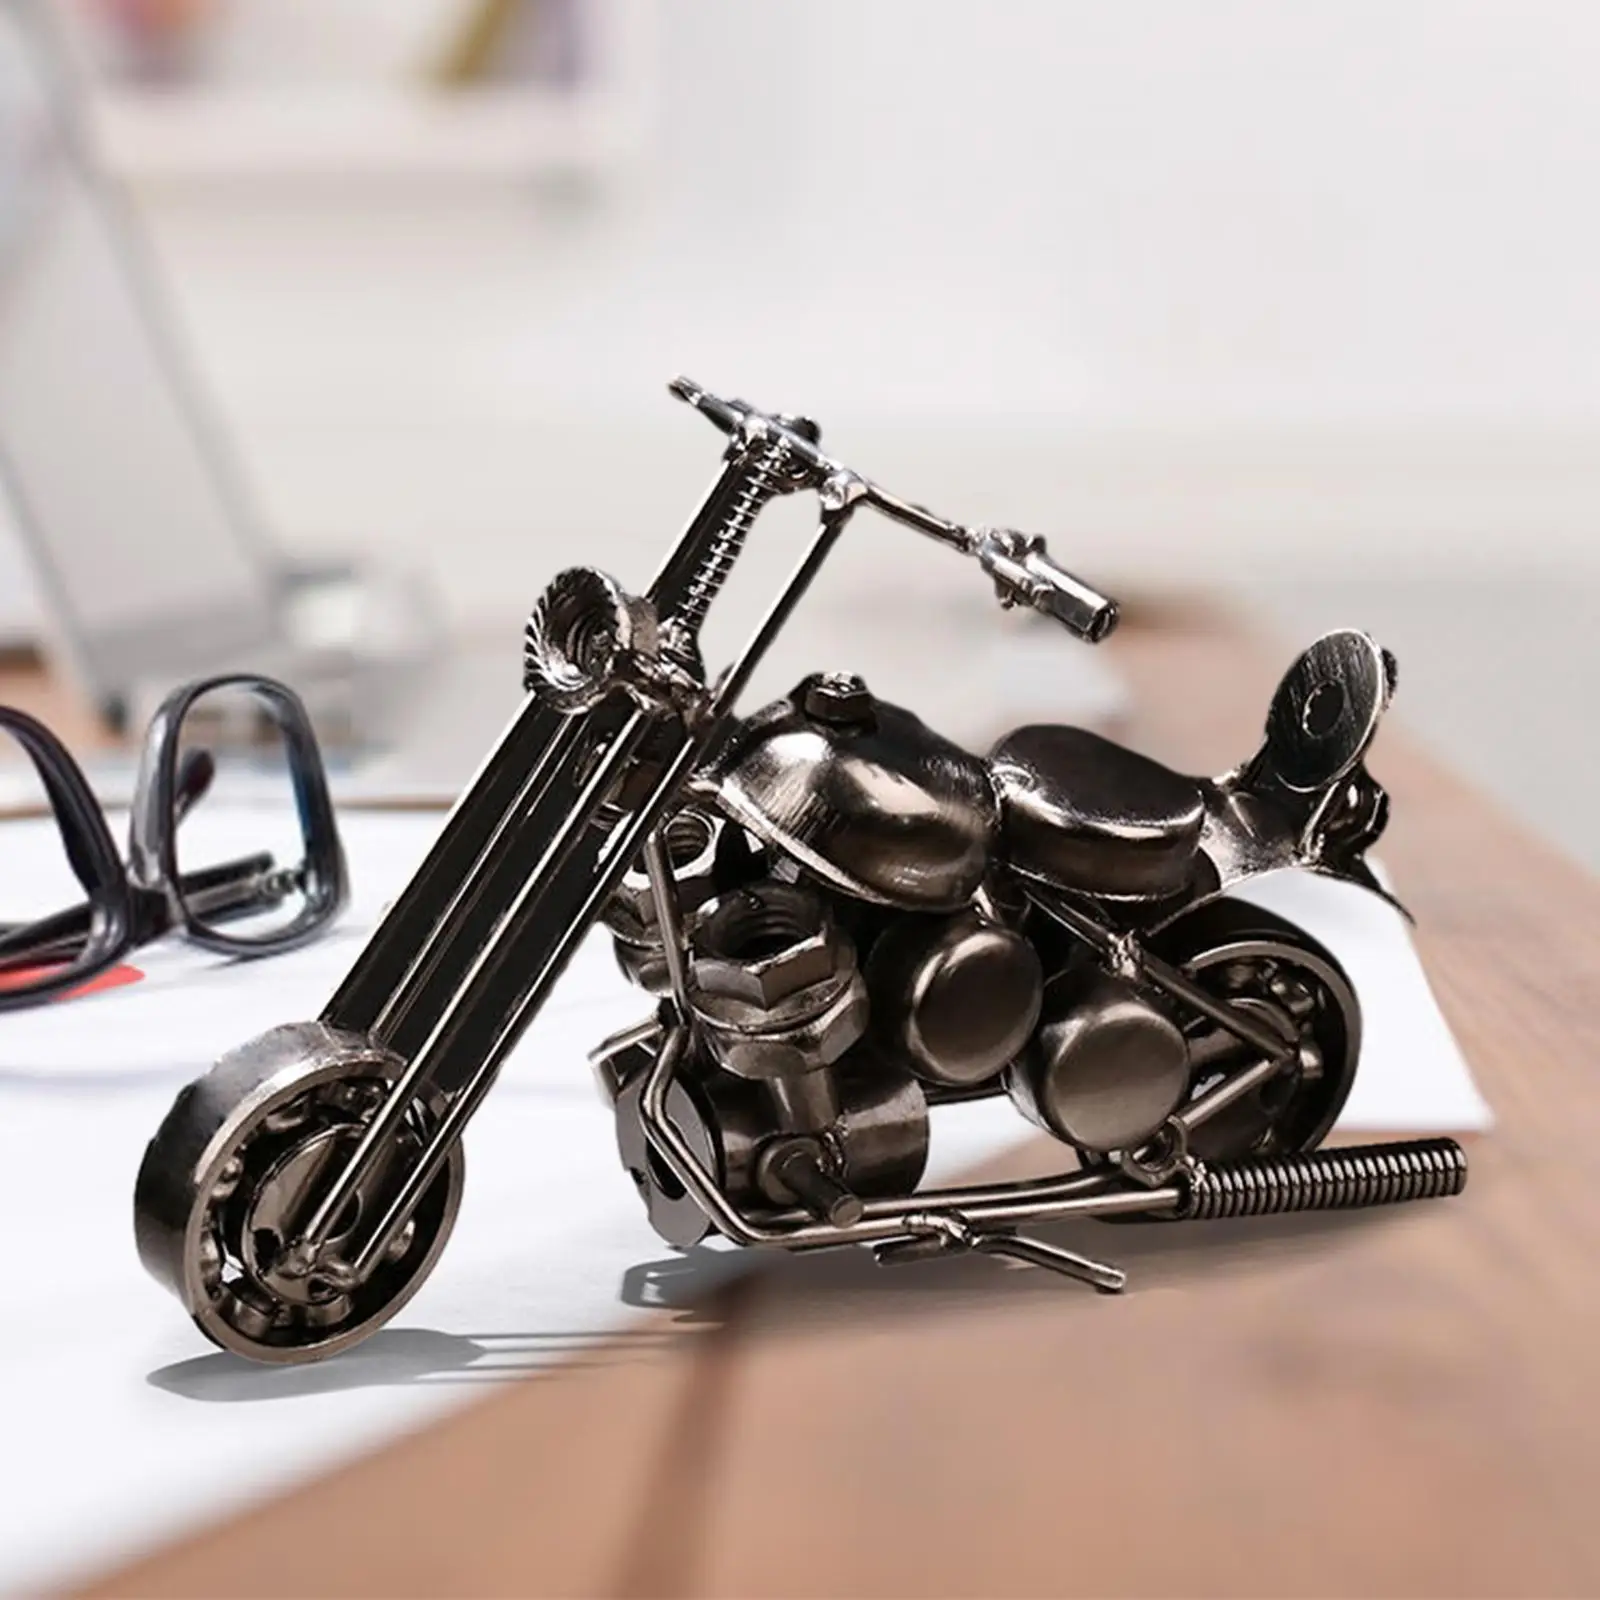 Motorcycle Model Motorcycle Sculpture Iron Photo Props Retro Style Collectible for Desktop Bookshelf Boys Son Boyfriend